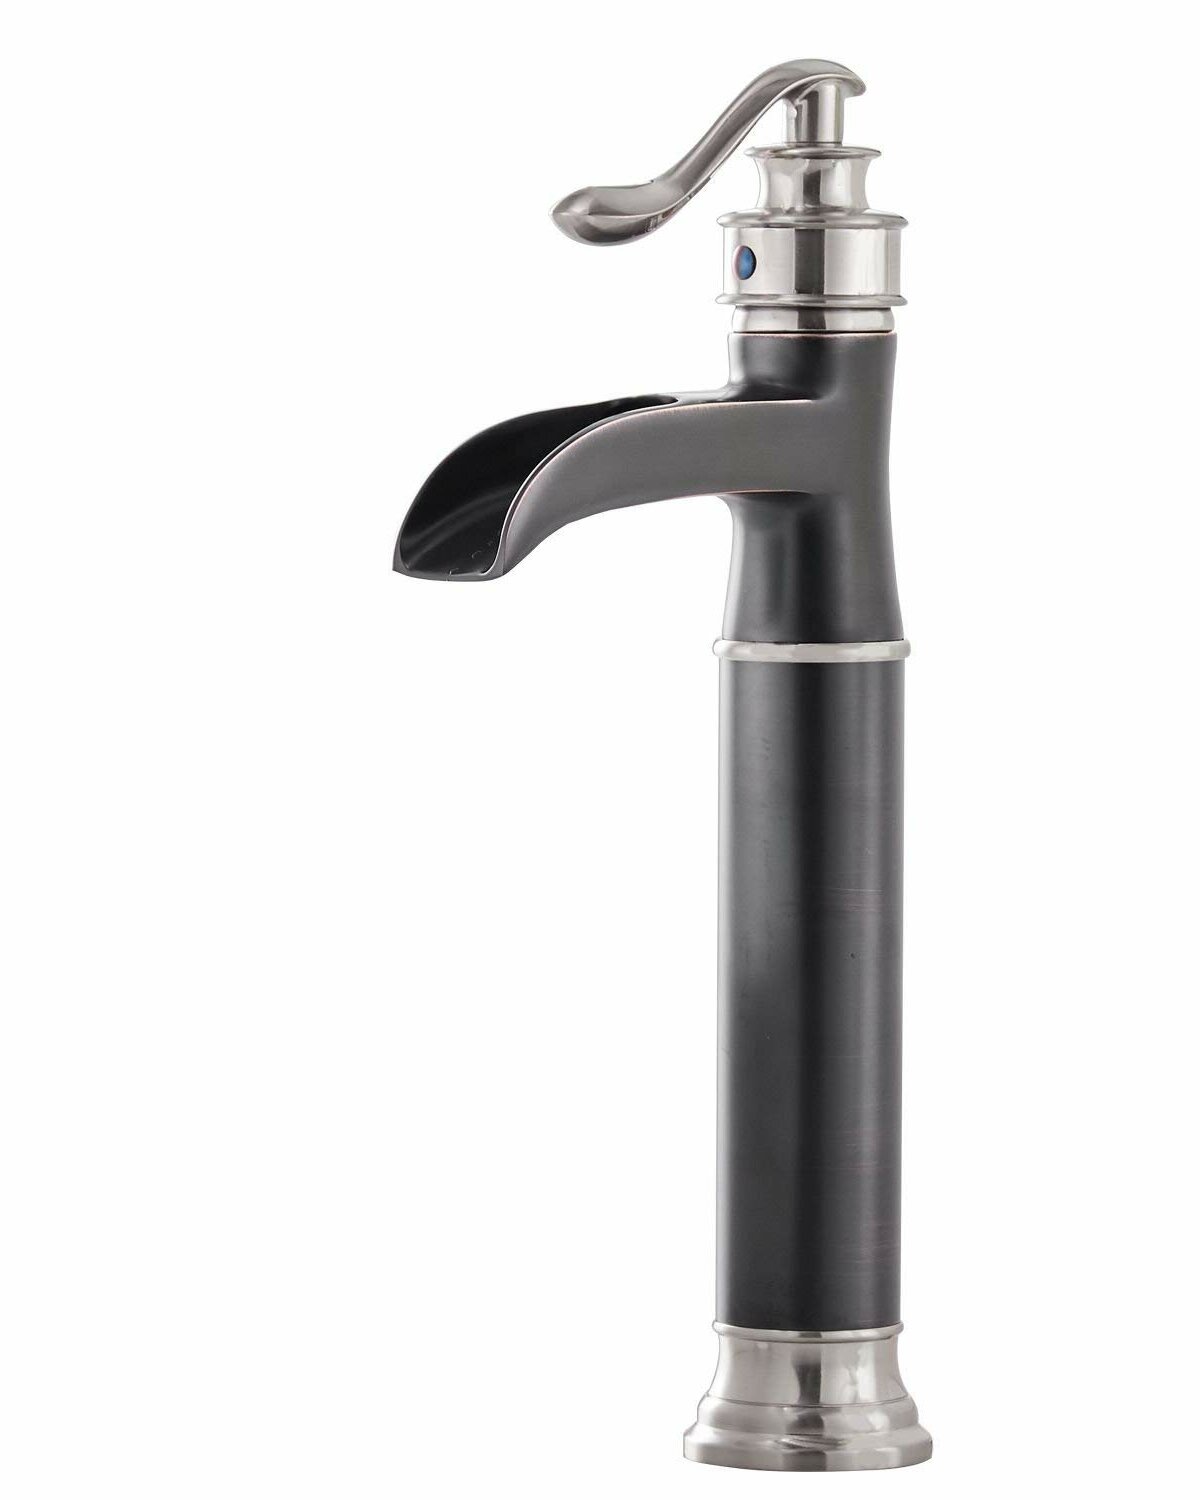 Dfi Waterfall Commercial Single Handle Lever Vessel Sink Bathroom Faucet Reviews Wayfair